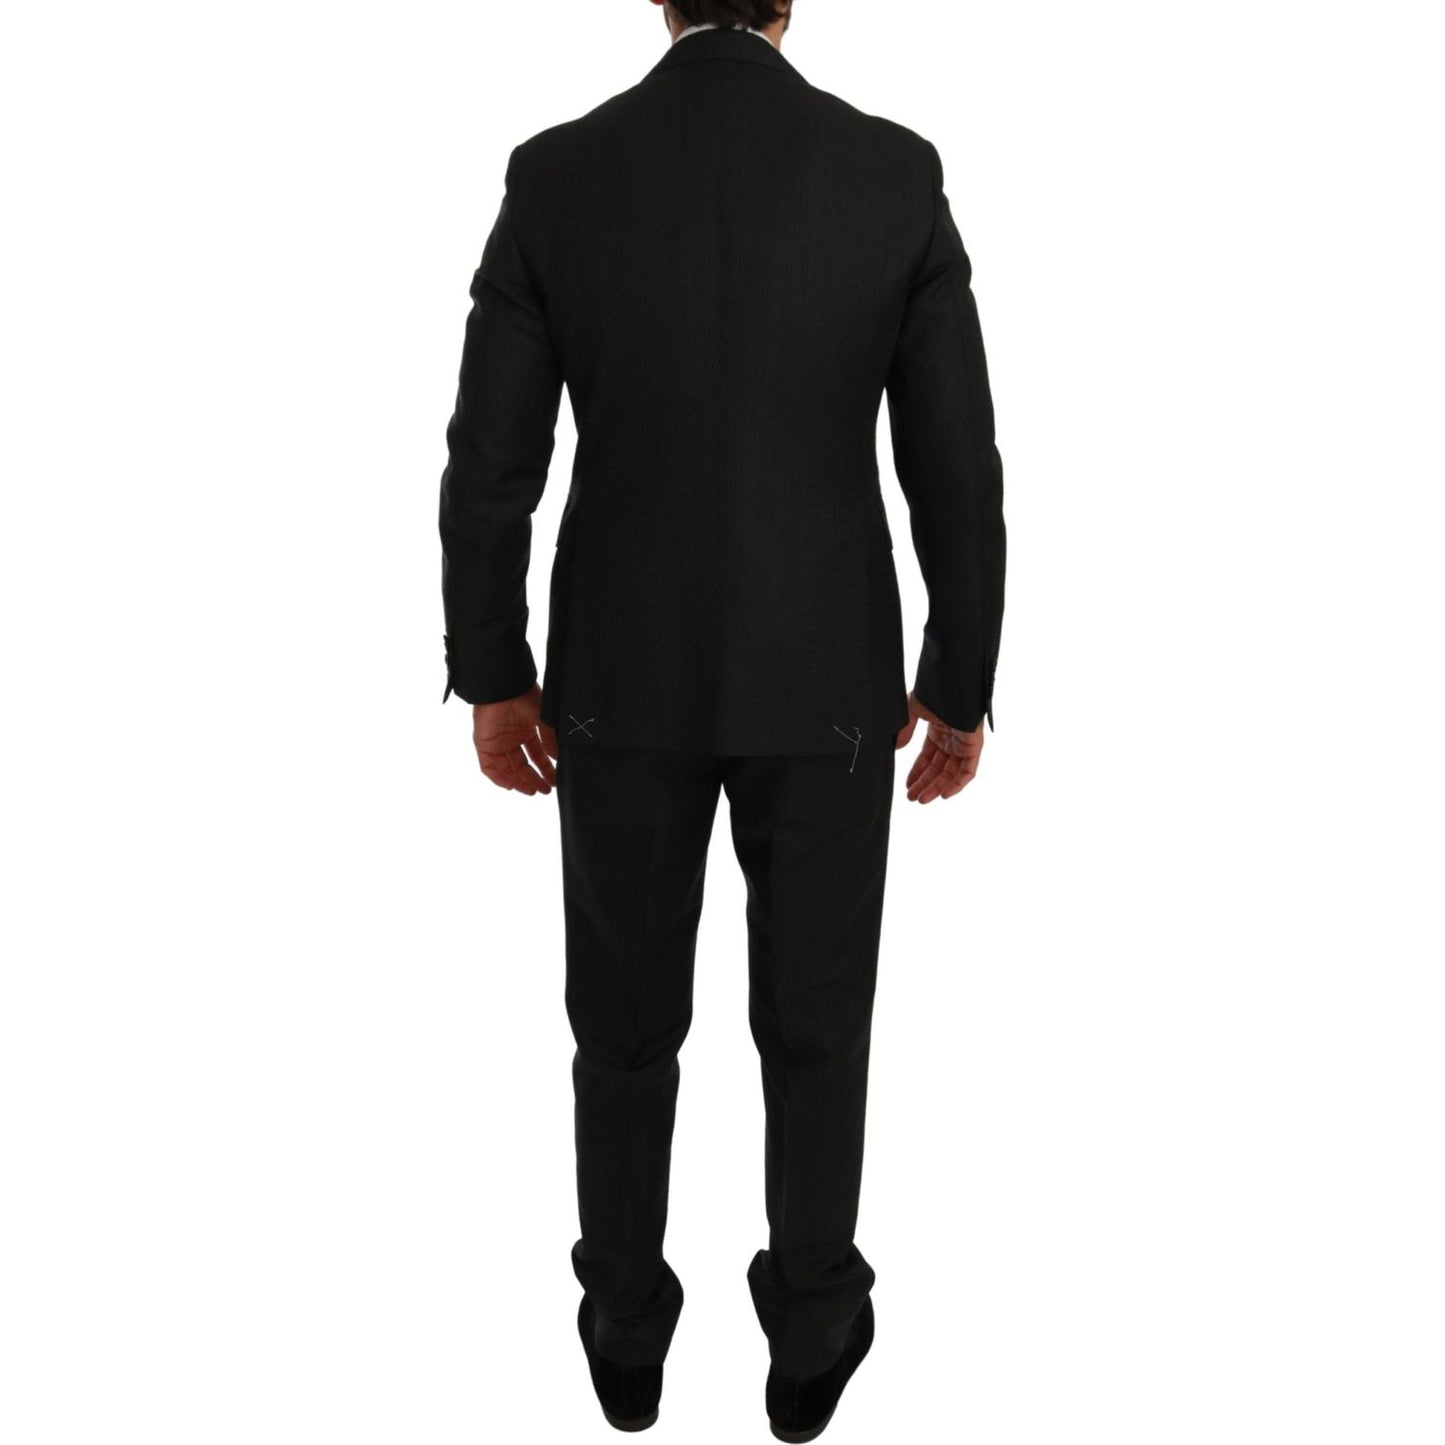 Dolce & Gabbana Elegant Black Crystal-Embellished Two-Piece Suit Suit black-crystal-bee-slim-fit-2-piece-suit